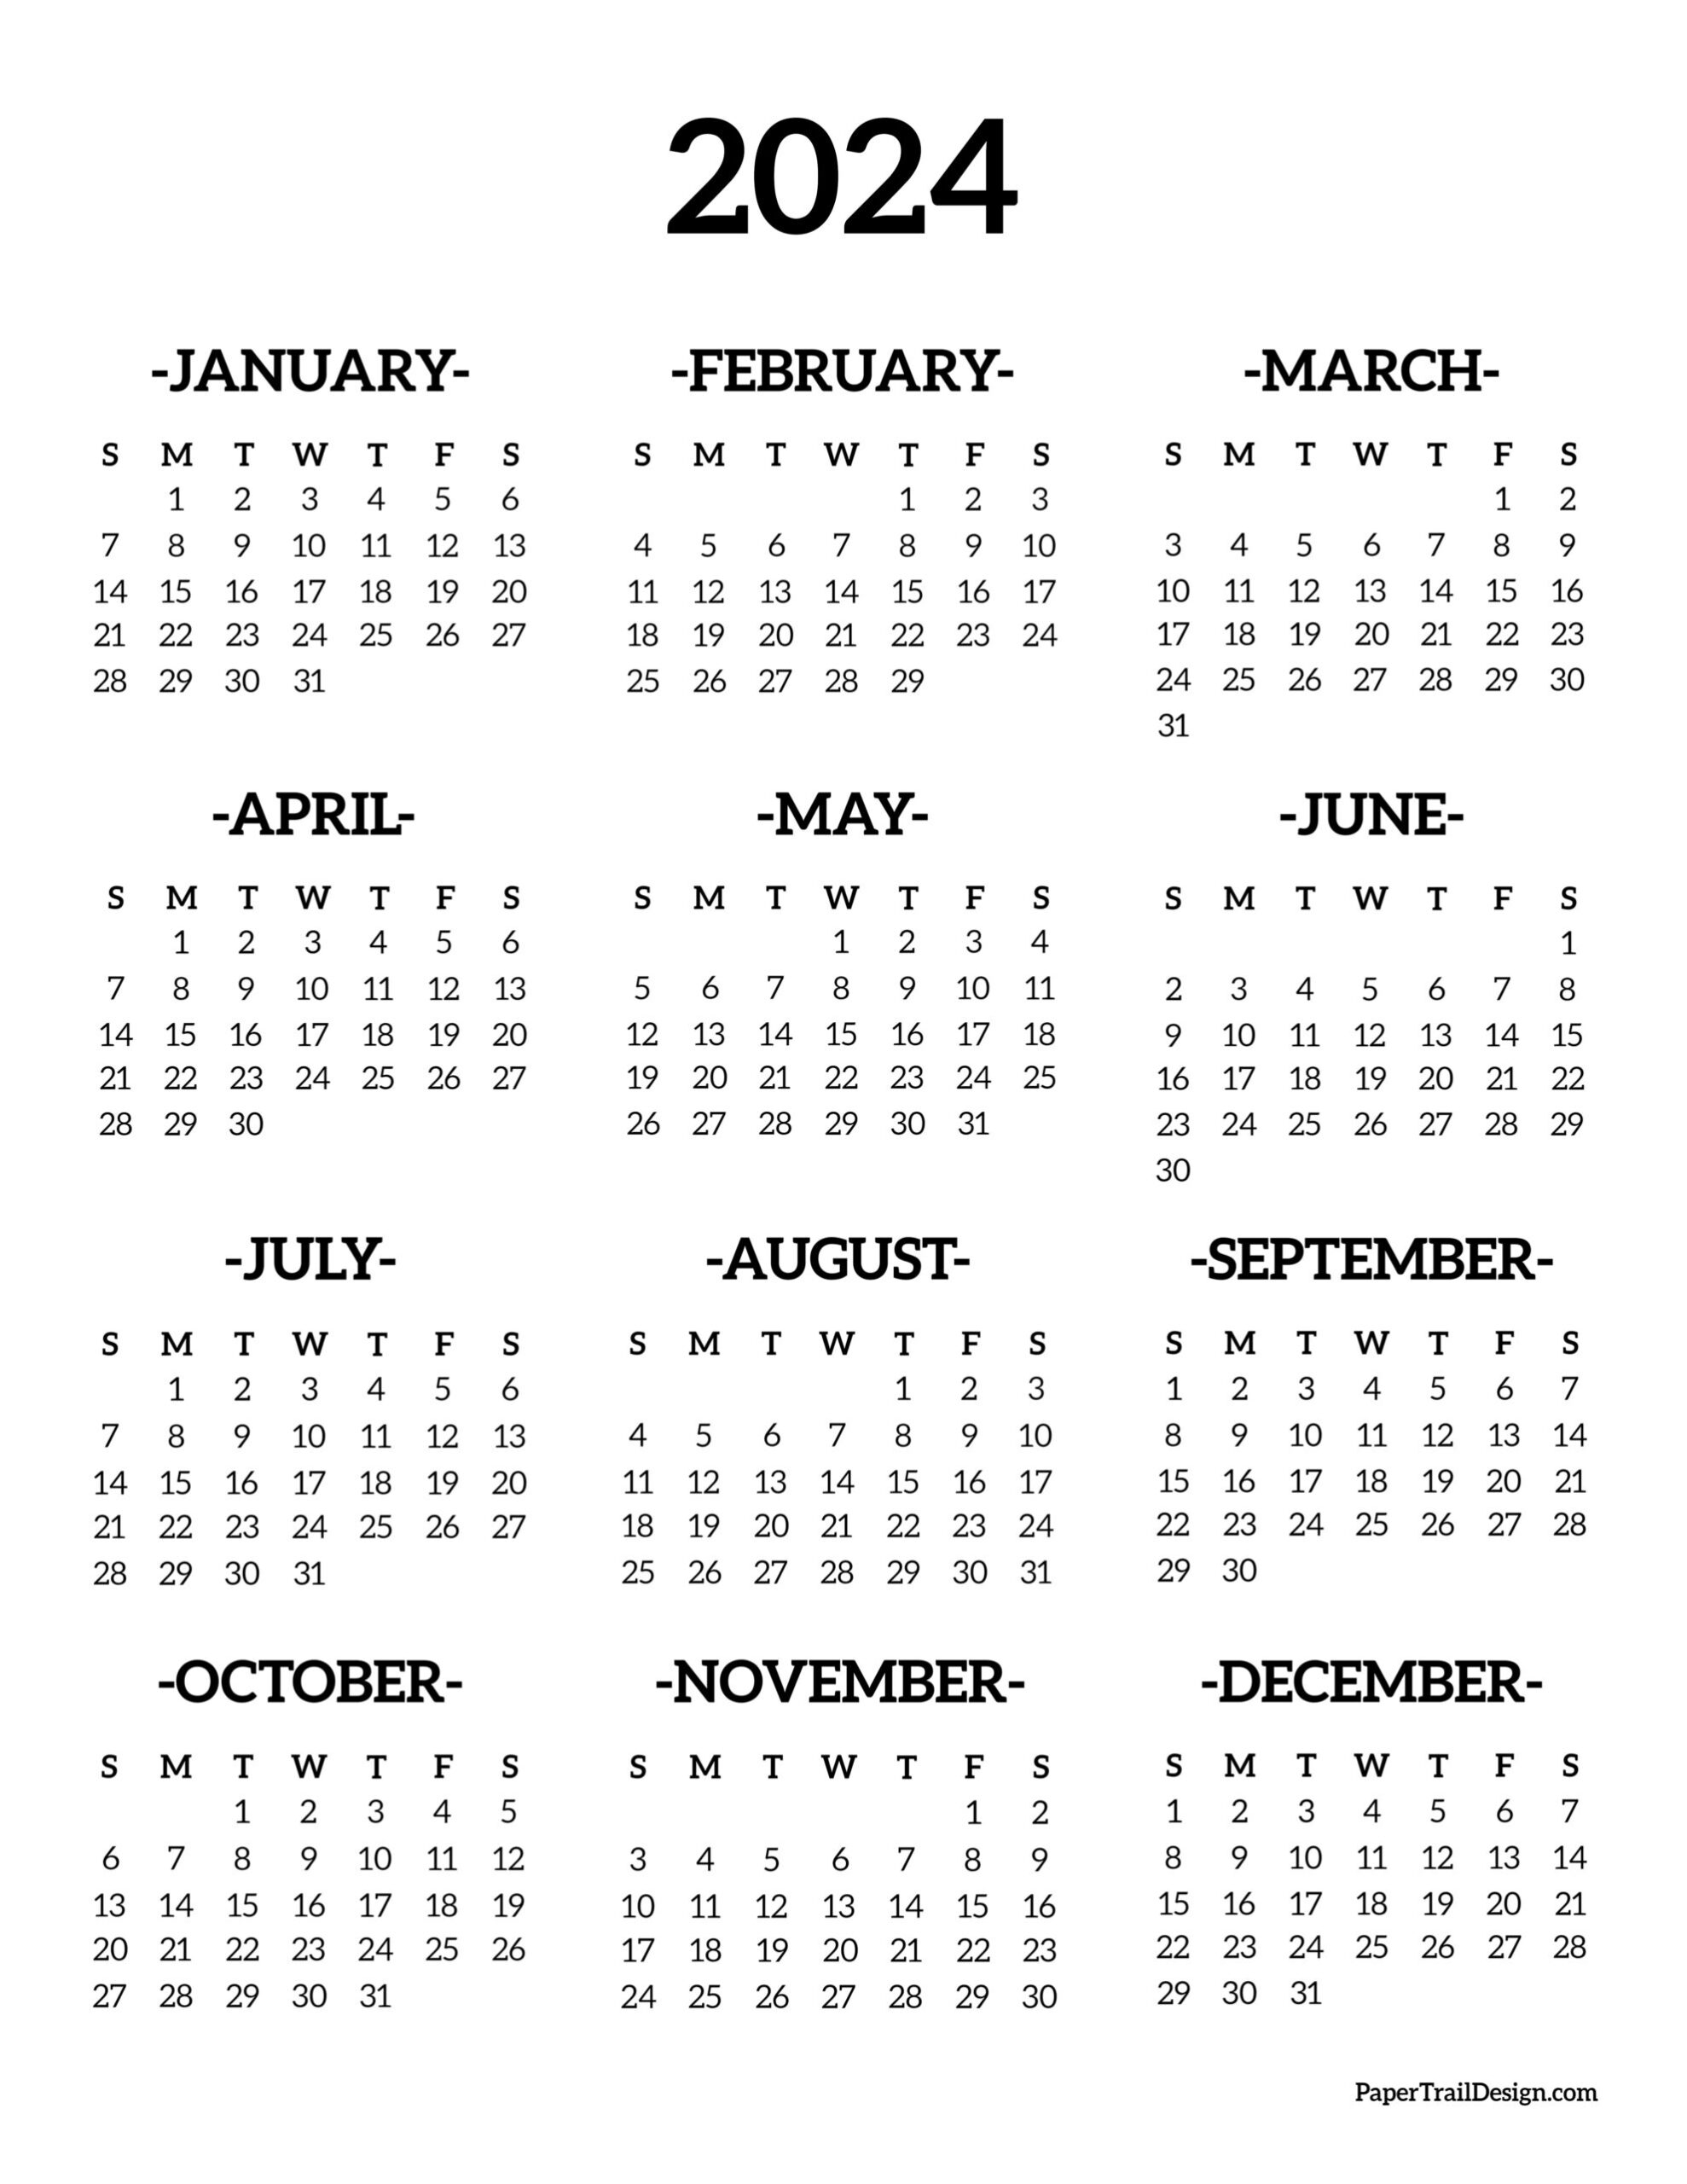 Calendar 2024 Printable One Page - Paper Trail Design | Printable 2024 Calendar Free